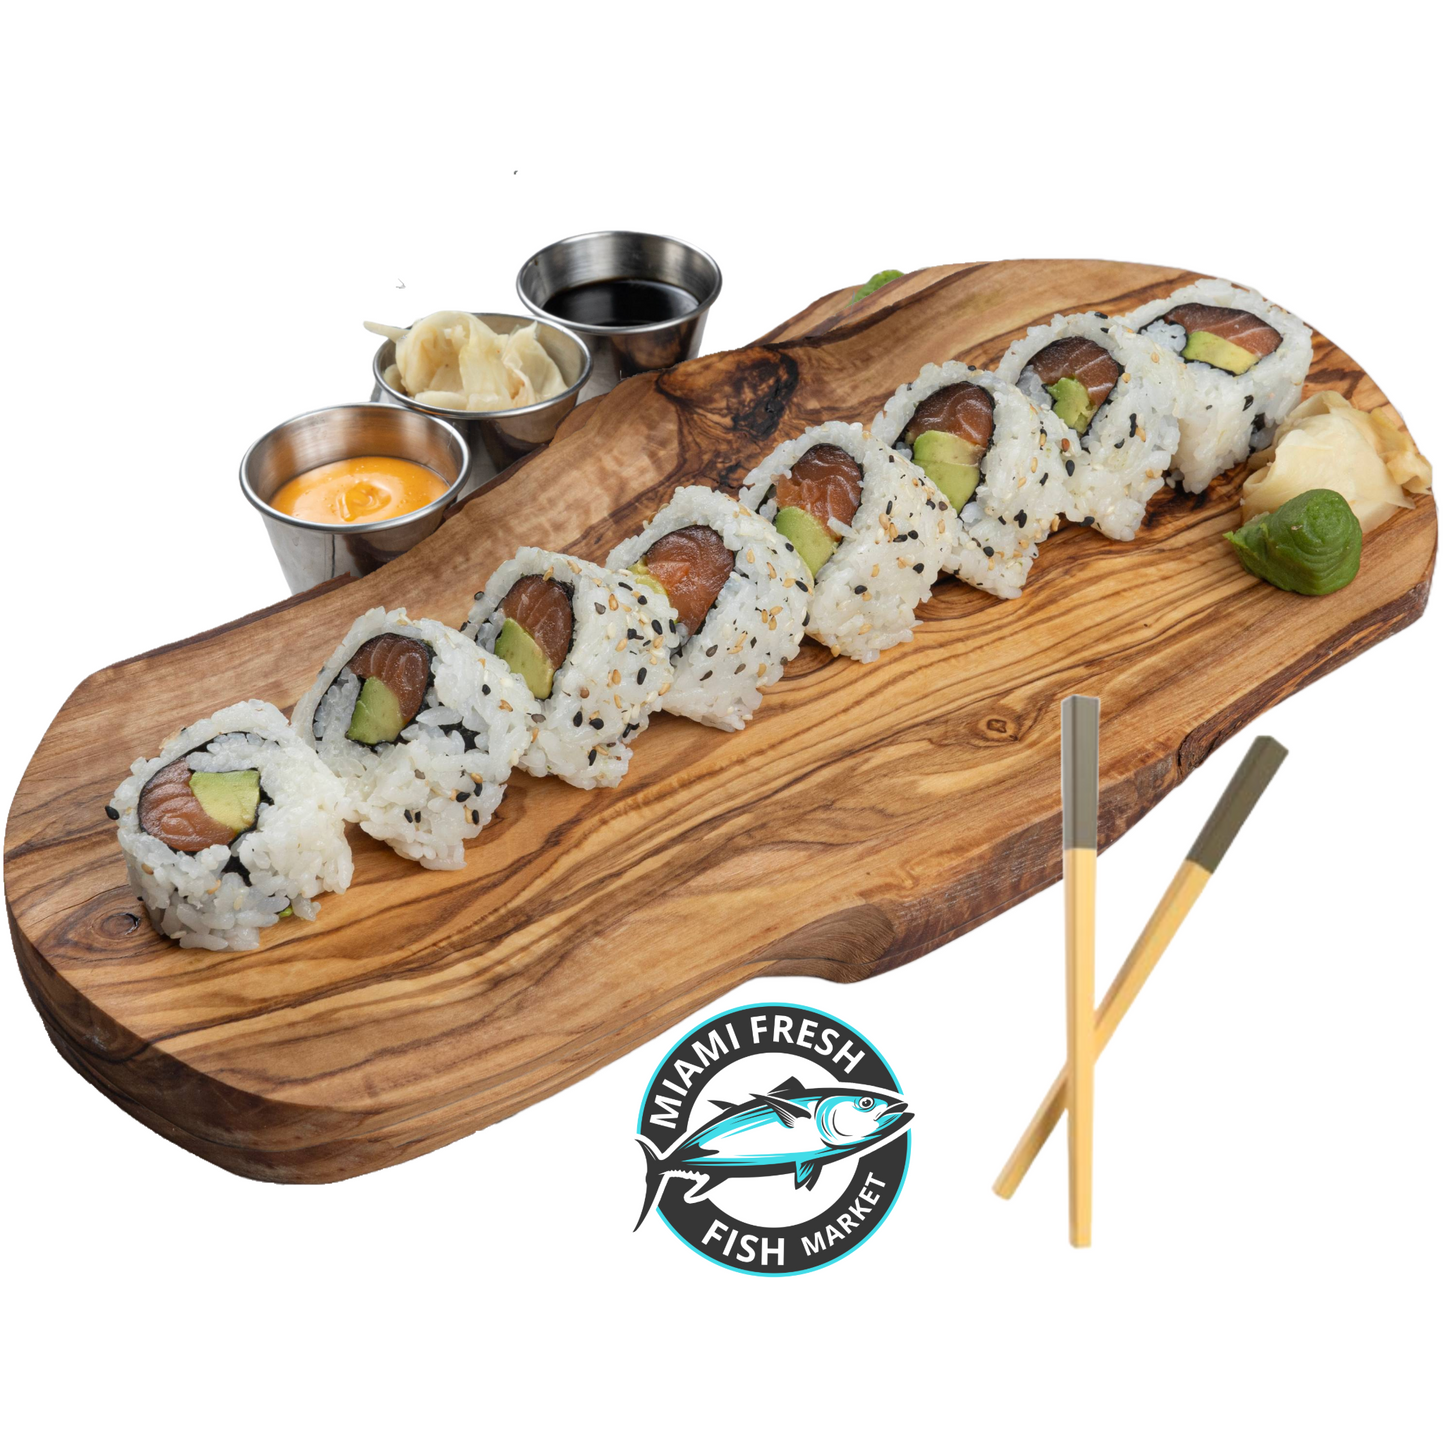 Sushi Basic Rolls Platter - 6 Rolls Serving 48 Pcs